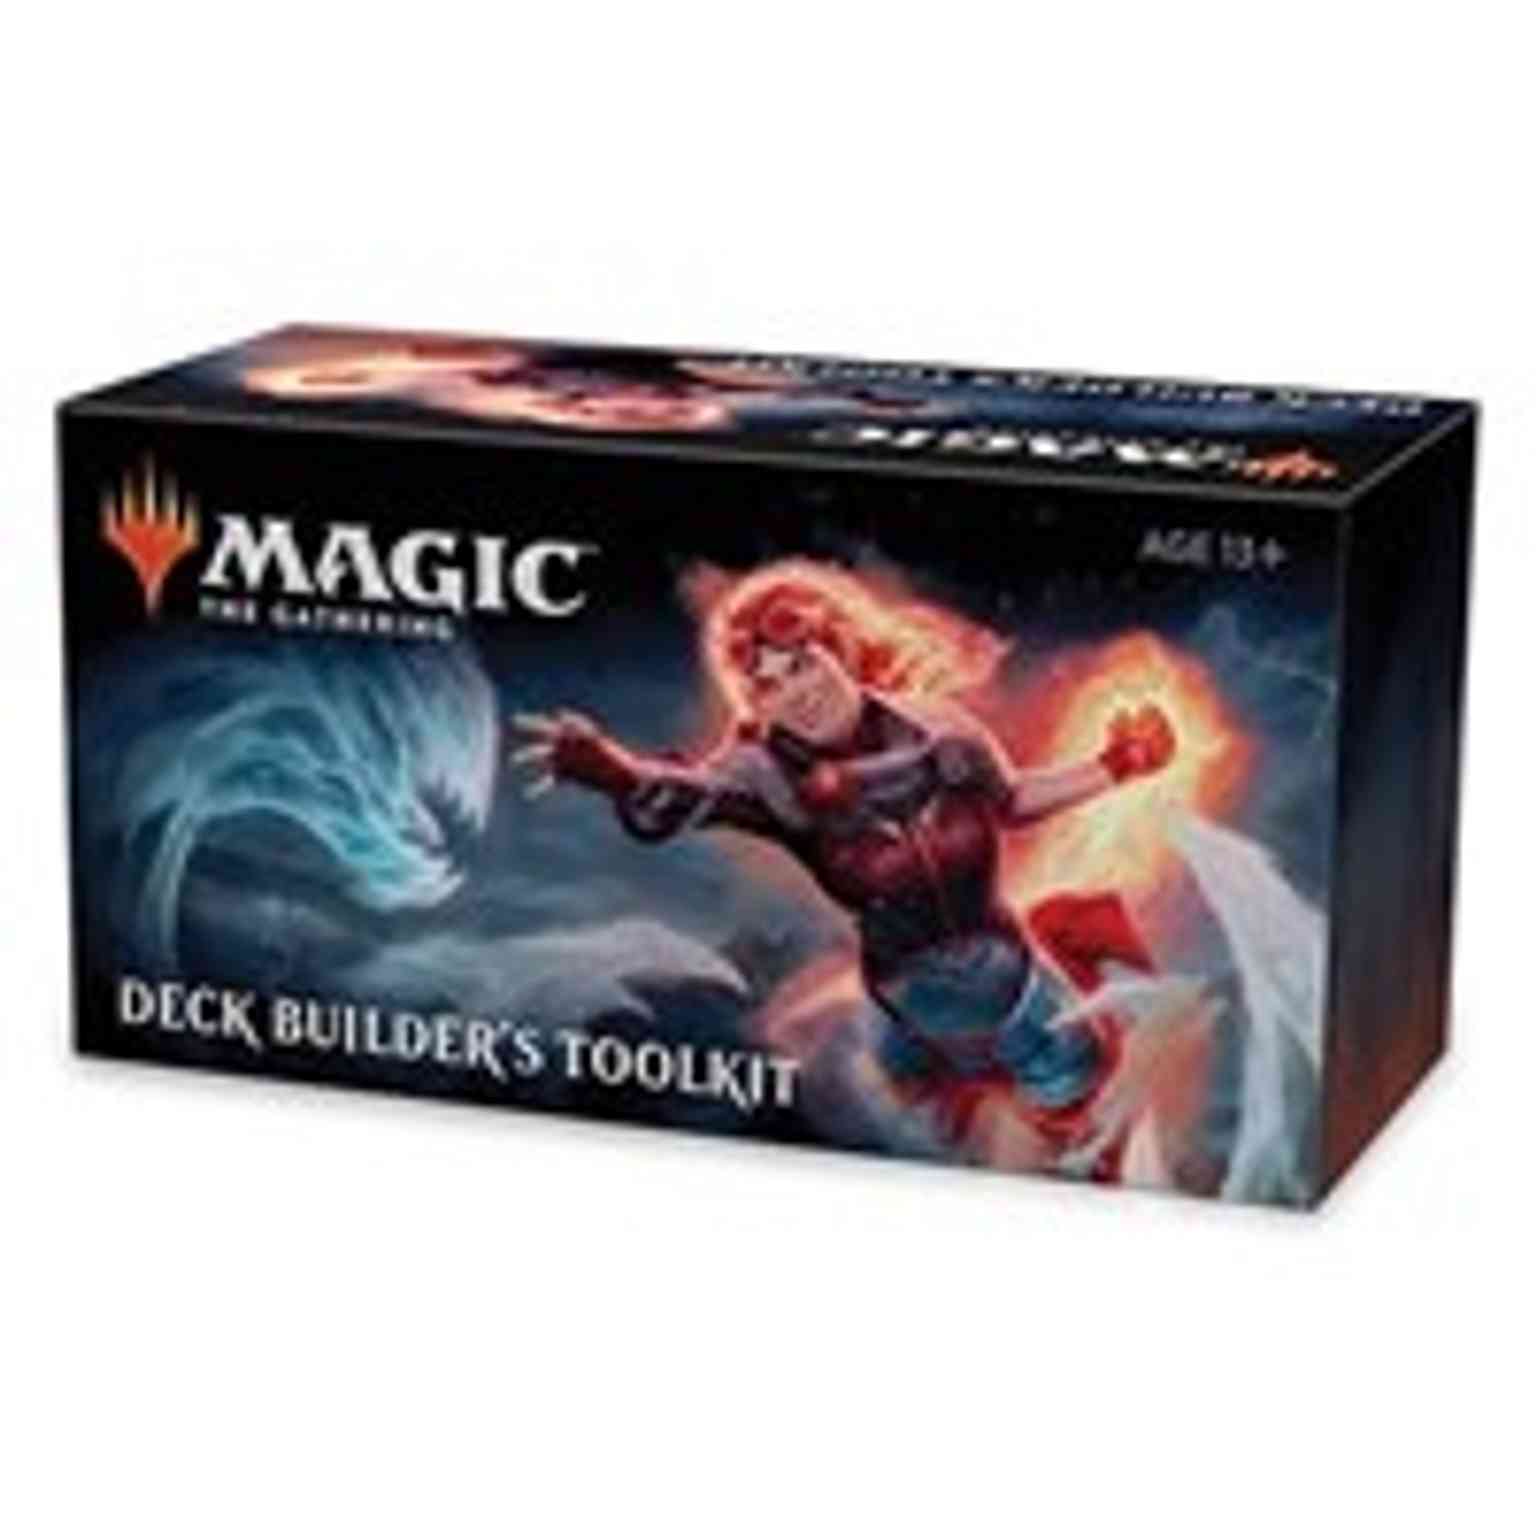 Core Set 2020 - Deck Builder's Toolkit magic card front